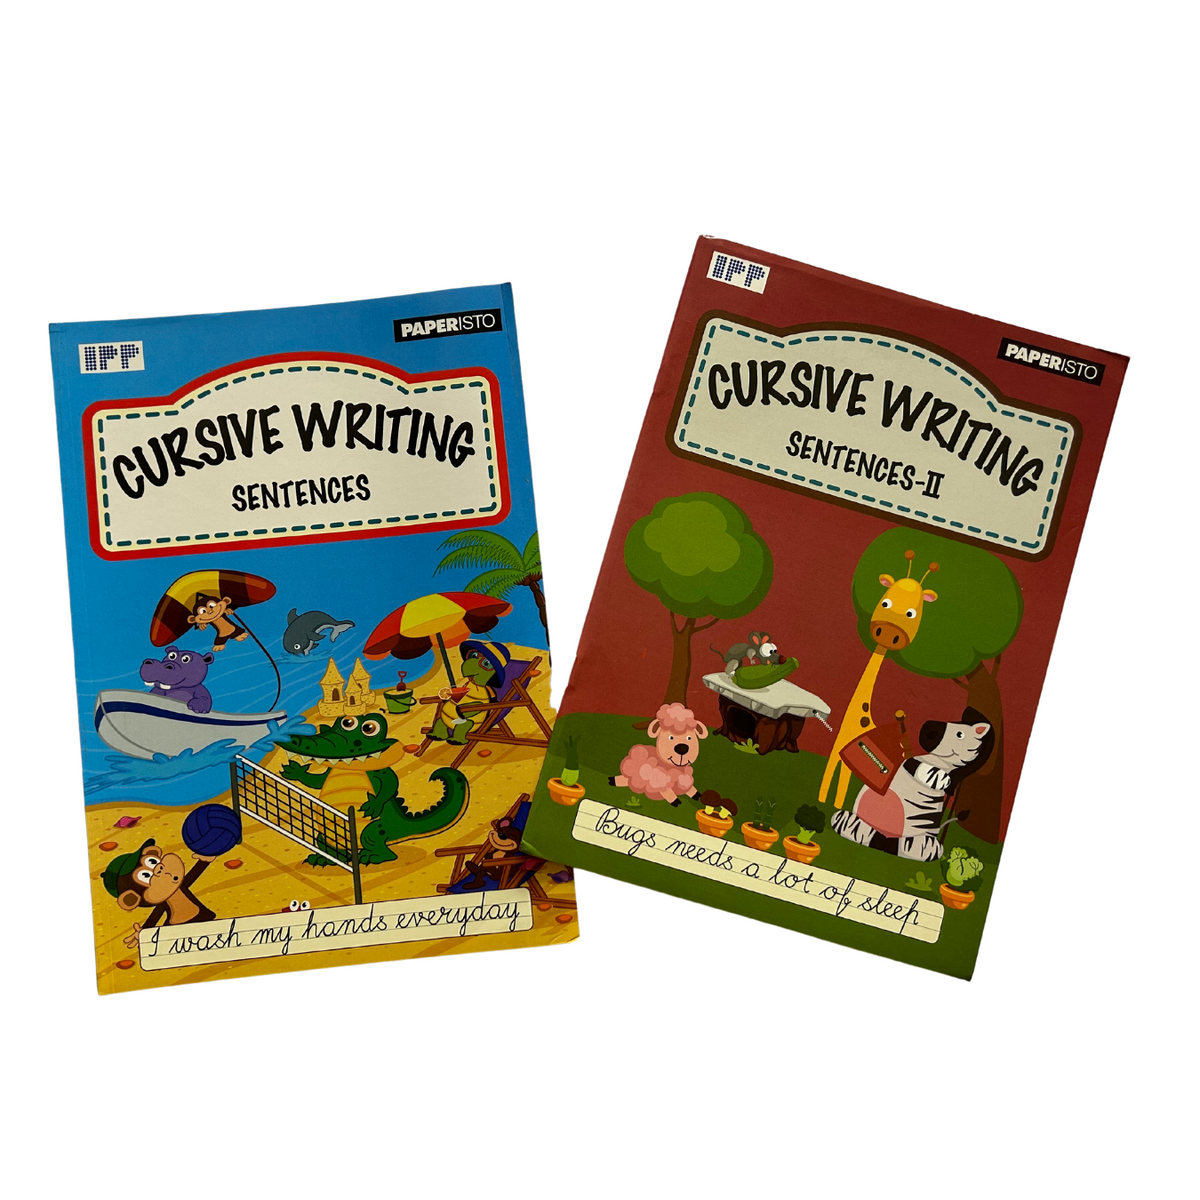 Set of 2 Cursive Writing Practice Books - Sentences Cursive Writing